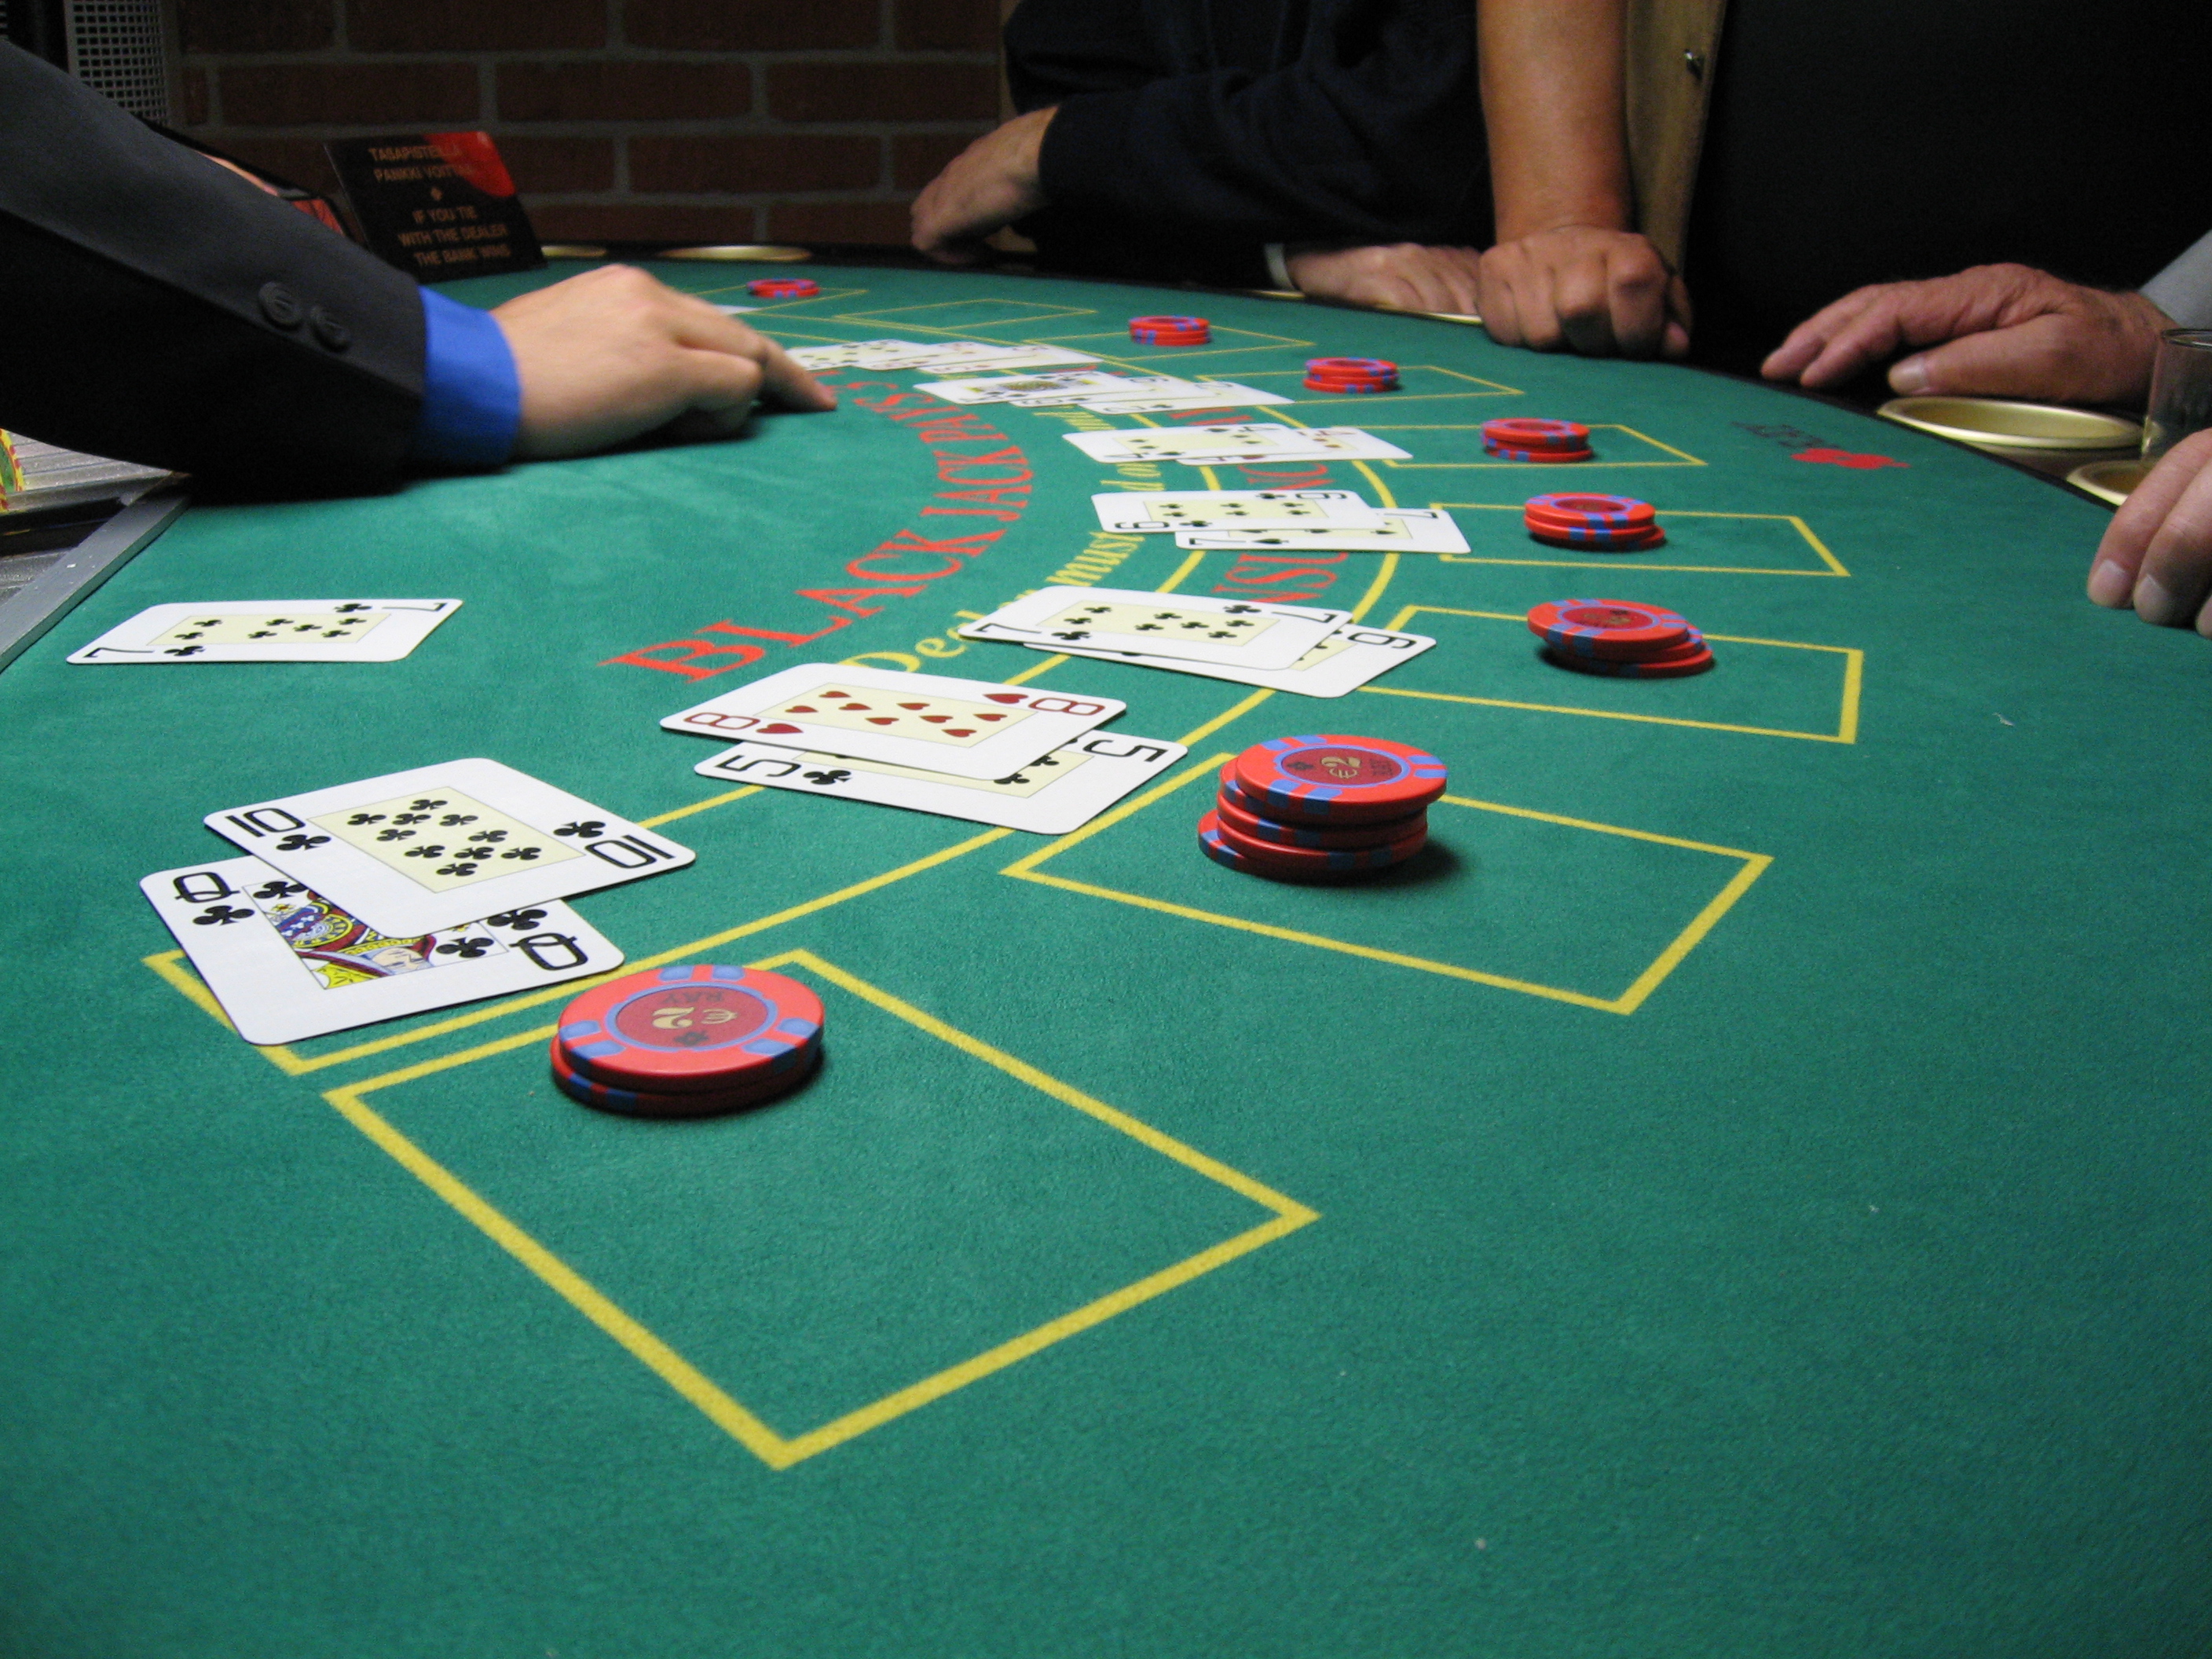 Casino games at 1bet: roulette, blackjack, slot machines